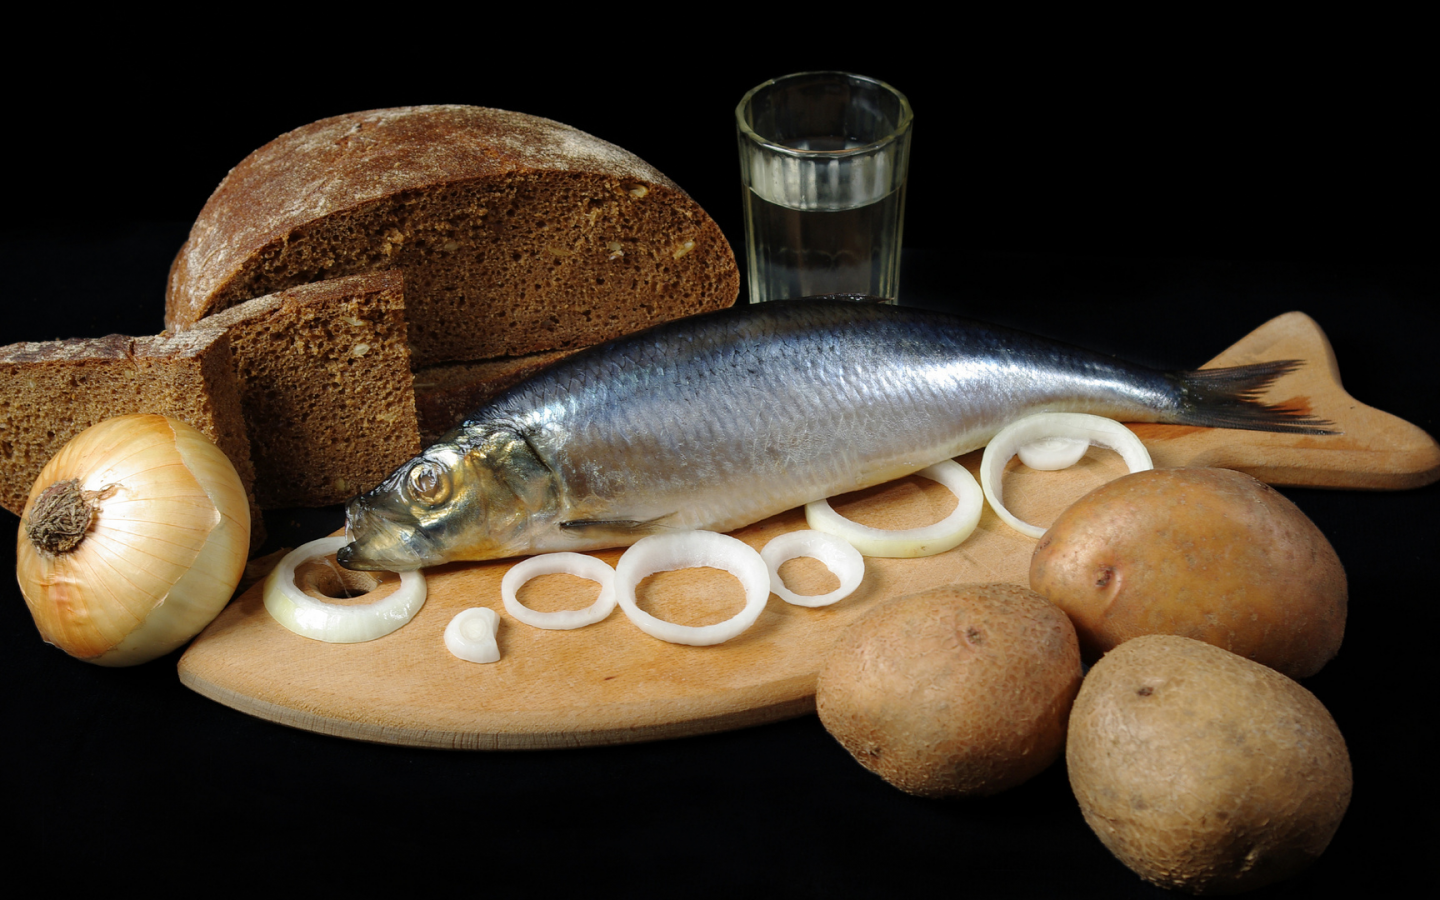 седёдка, картошка, лук, хлеб, стопка, водка, рыба